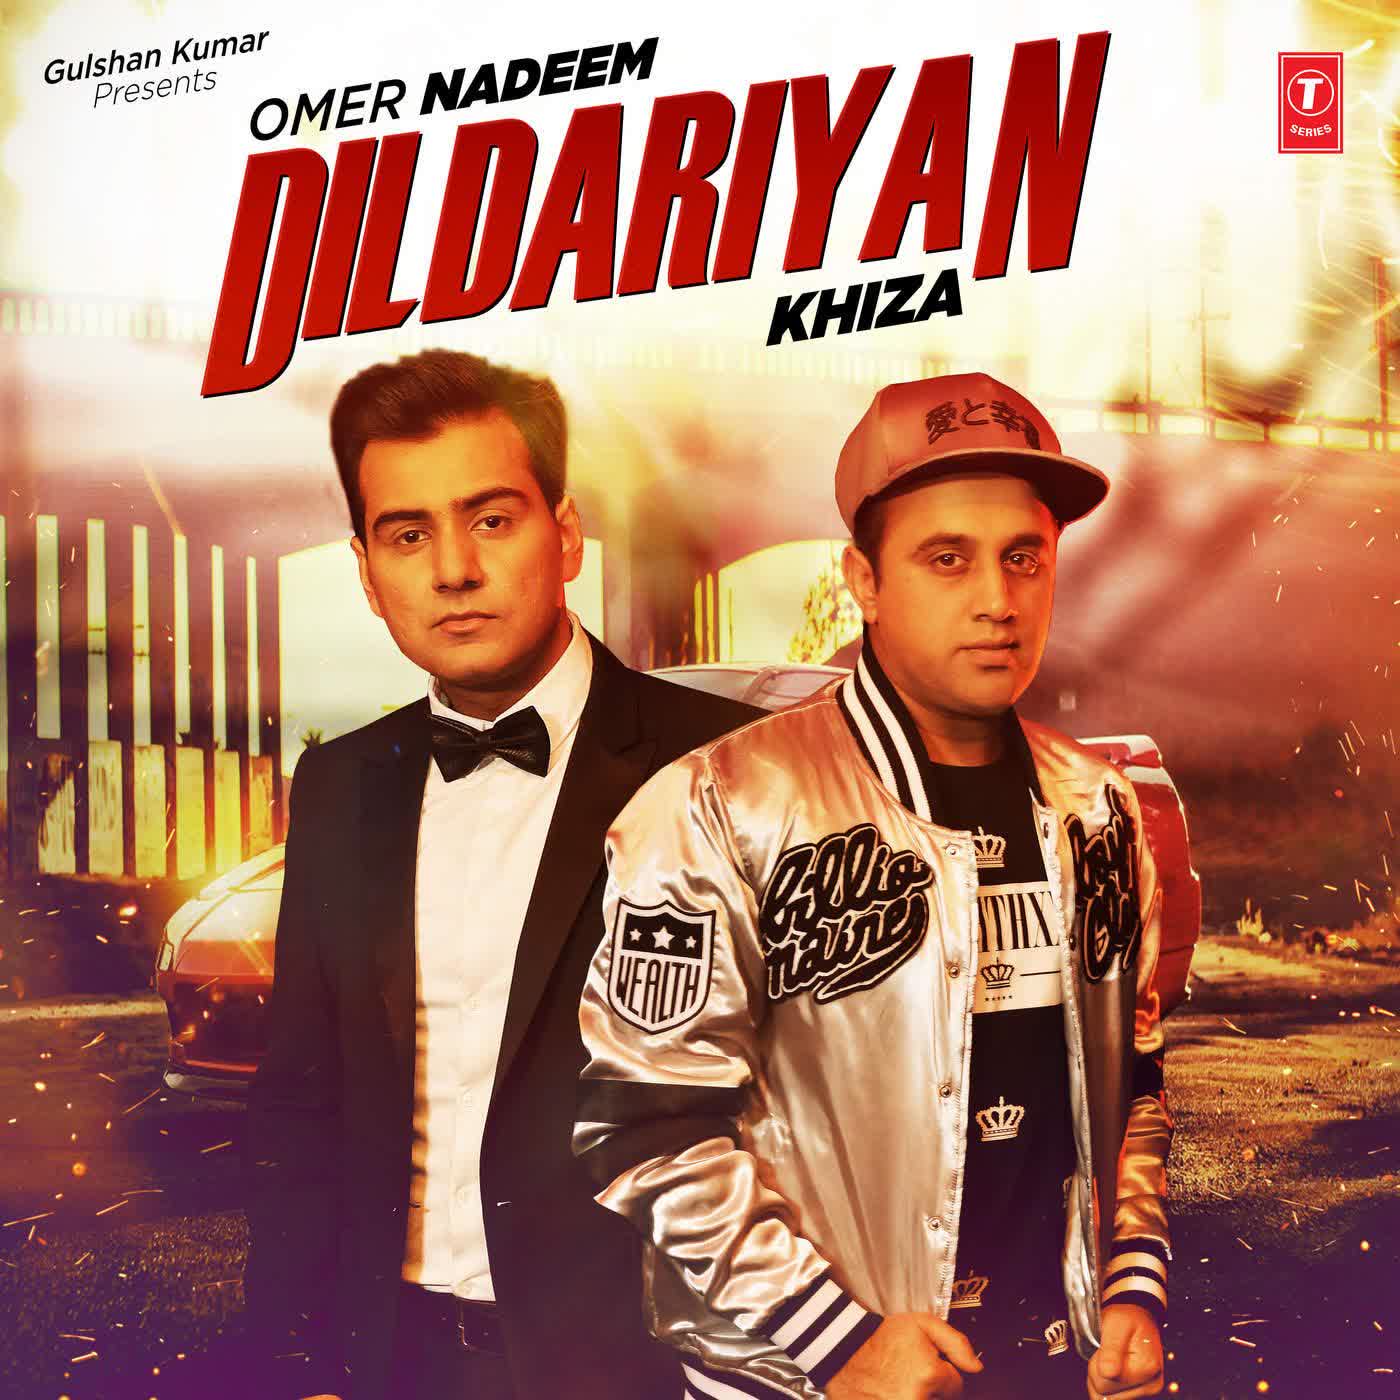 Dildariyan Omer Nadeem  Mp3 song download